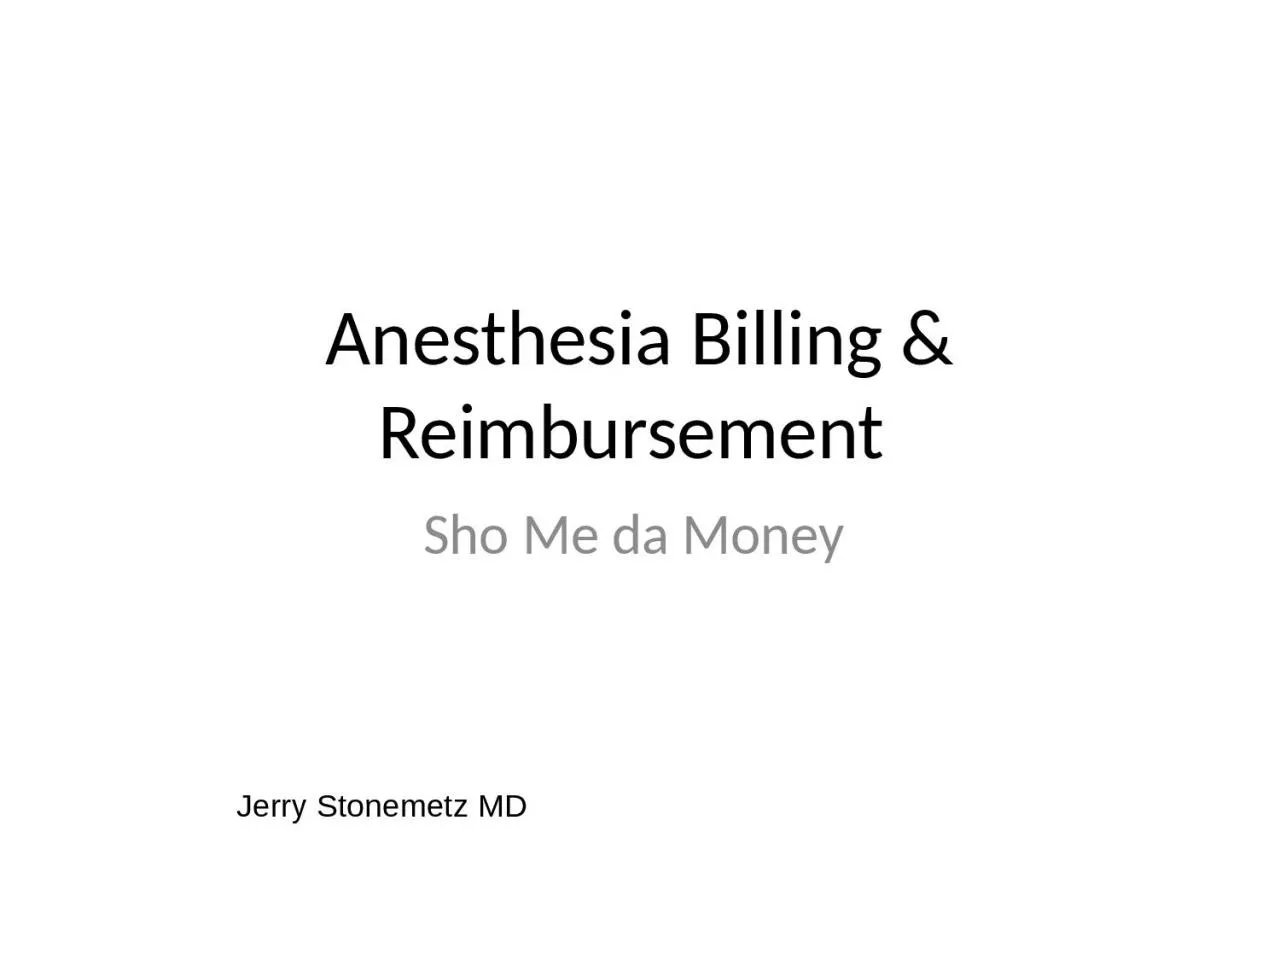 Anesthesia Billing & Reimbursement